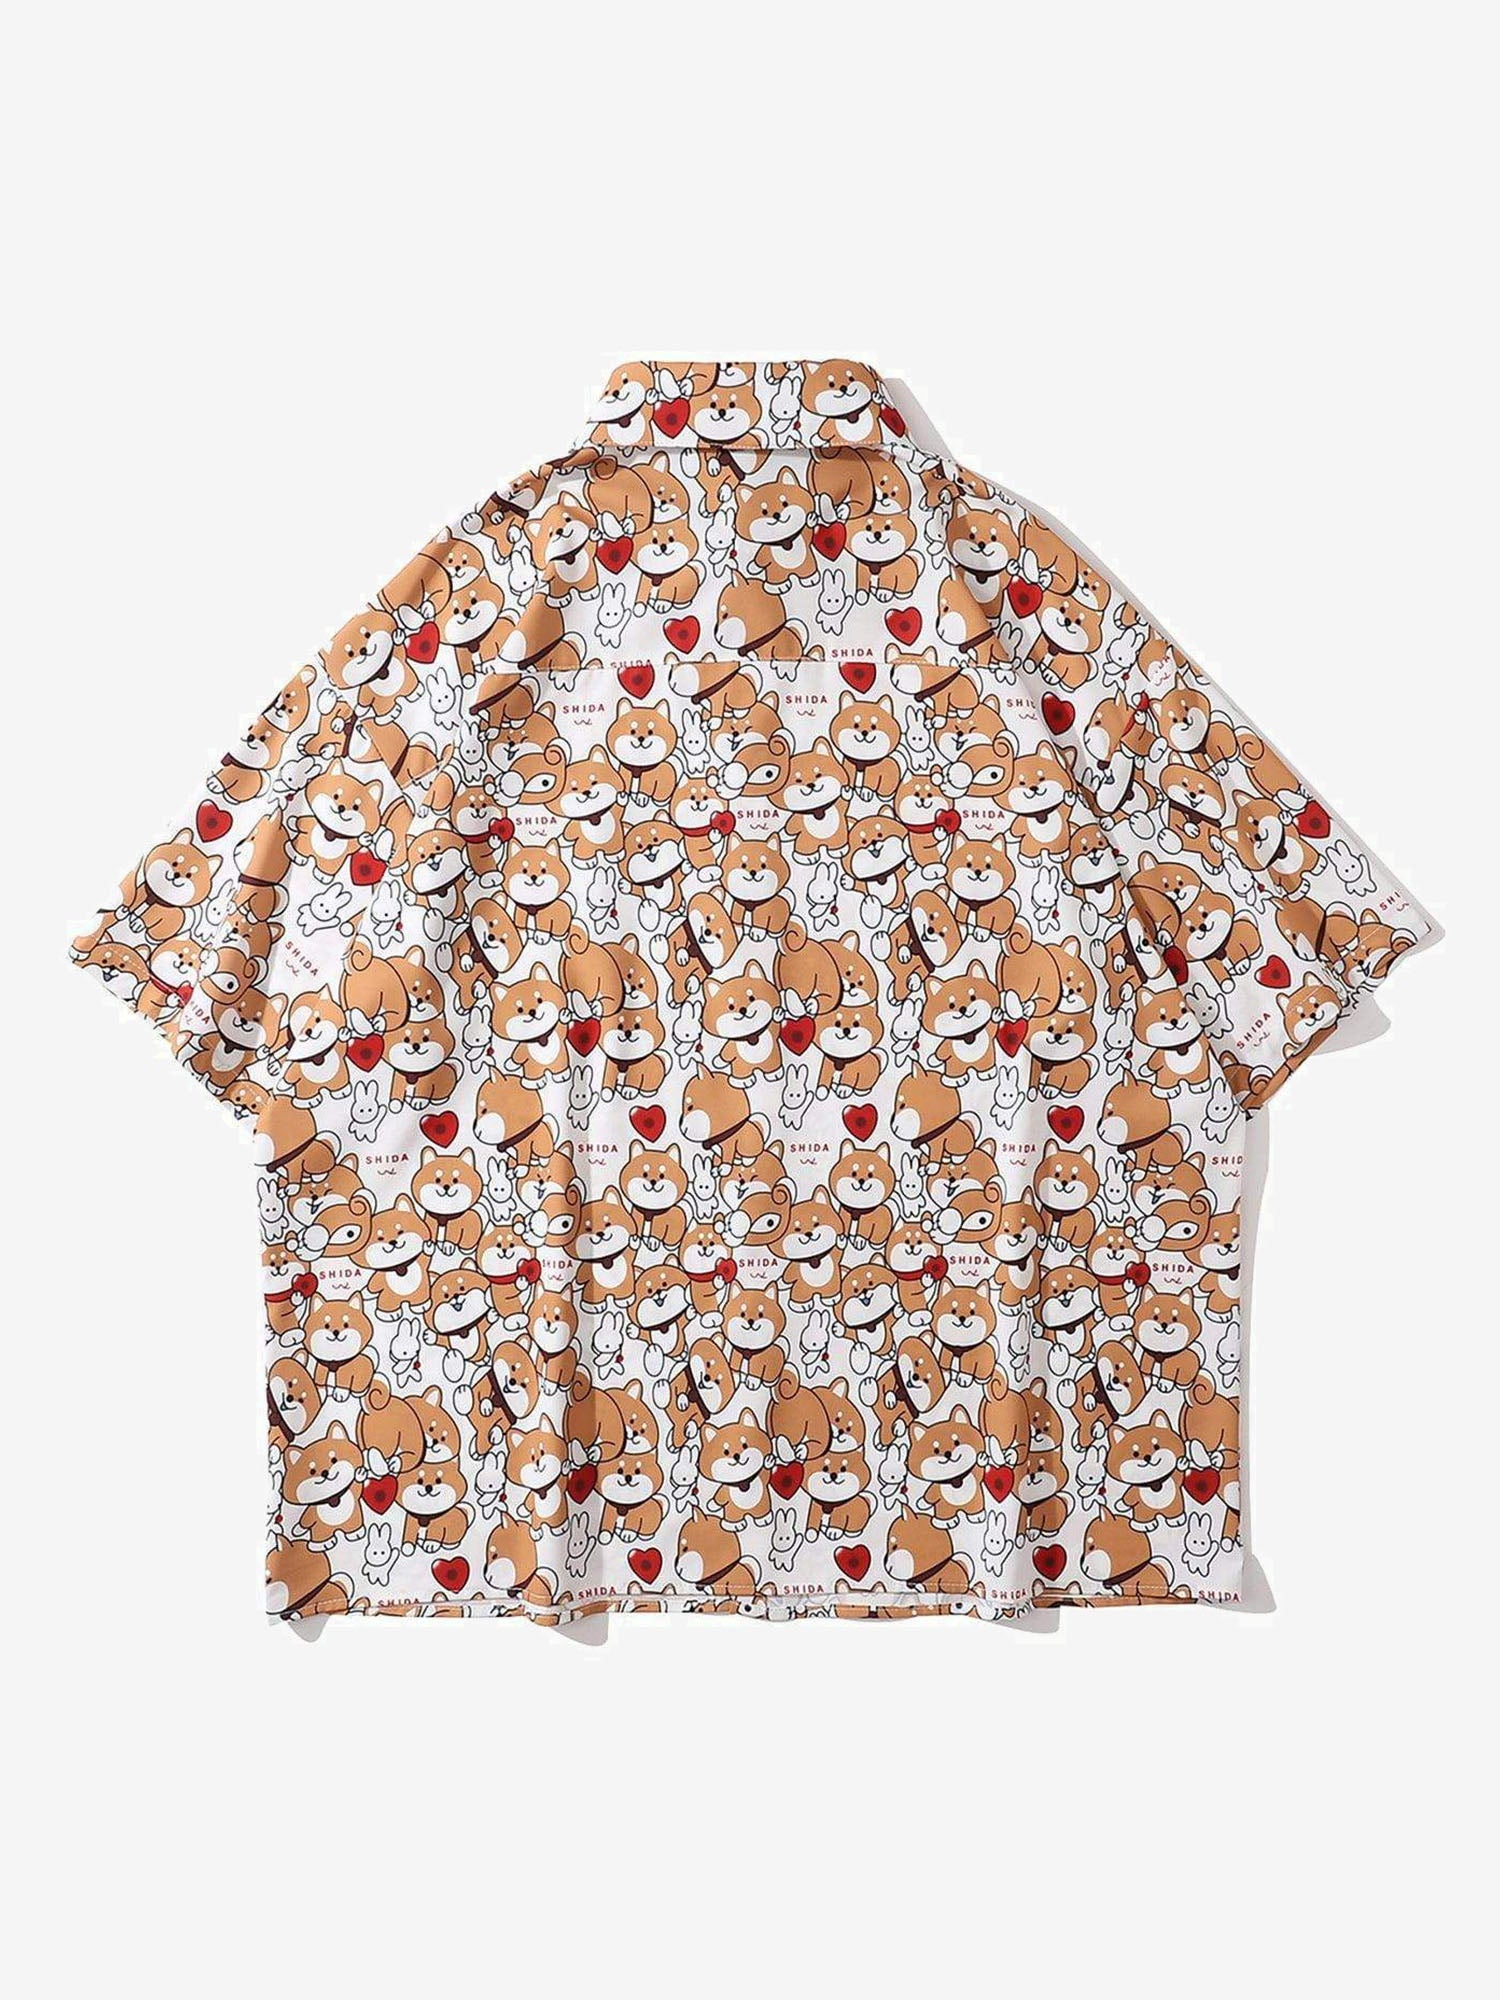 JUSTNOTAG Cartoon Dog Full Print Resort style Short Sleeved Shirt